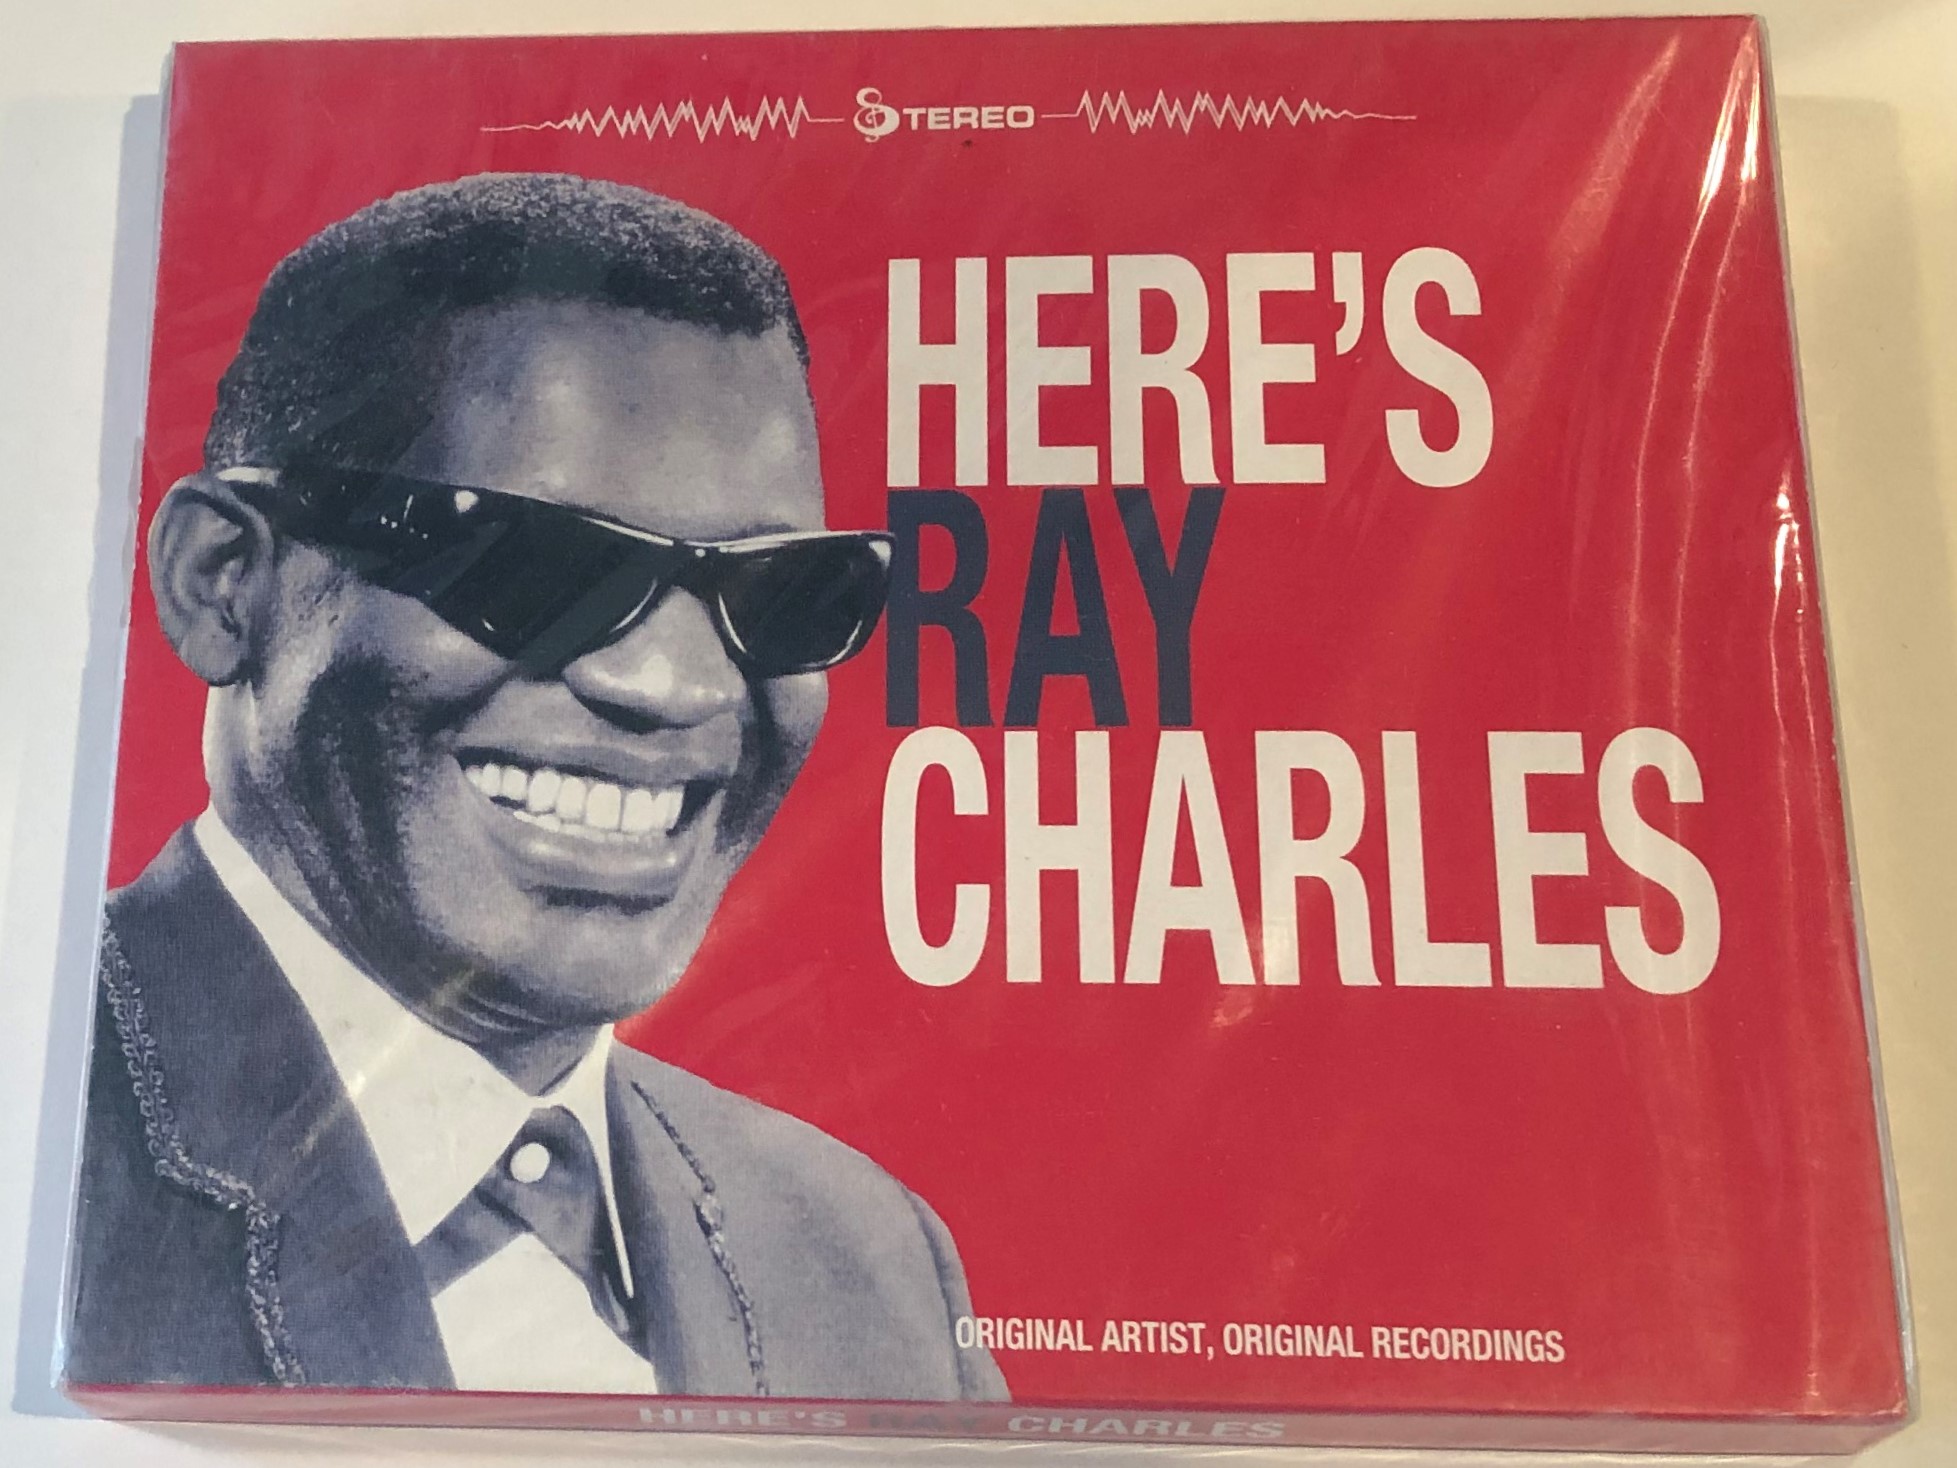 here-s-ray-charles-original-artist-original-recordings-disky-audio-cd-stereo-si-903643-1-.jpg